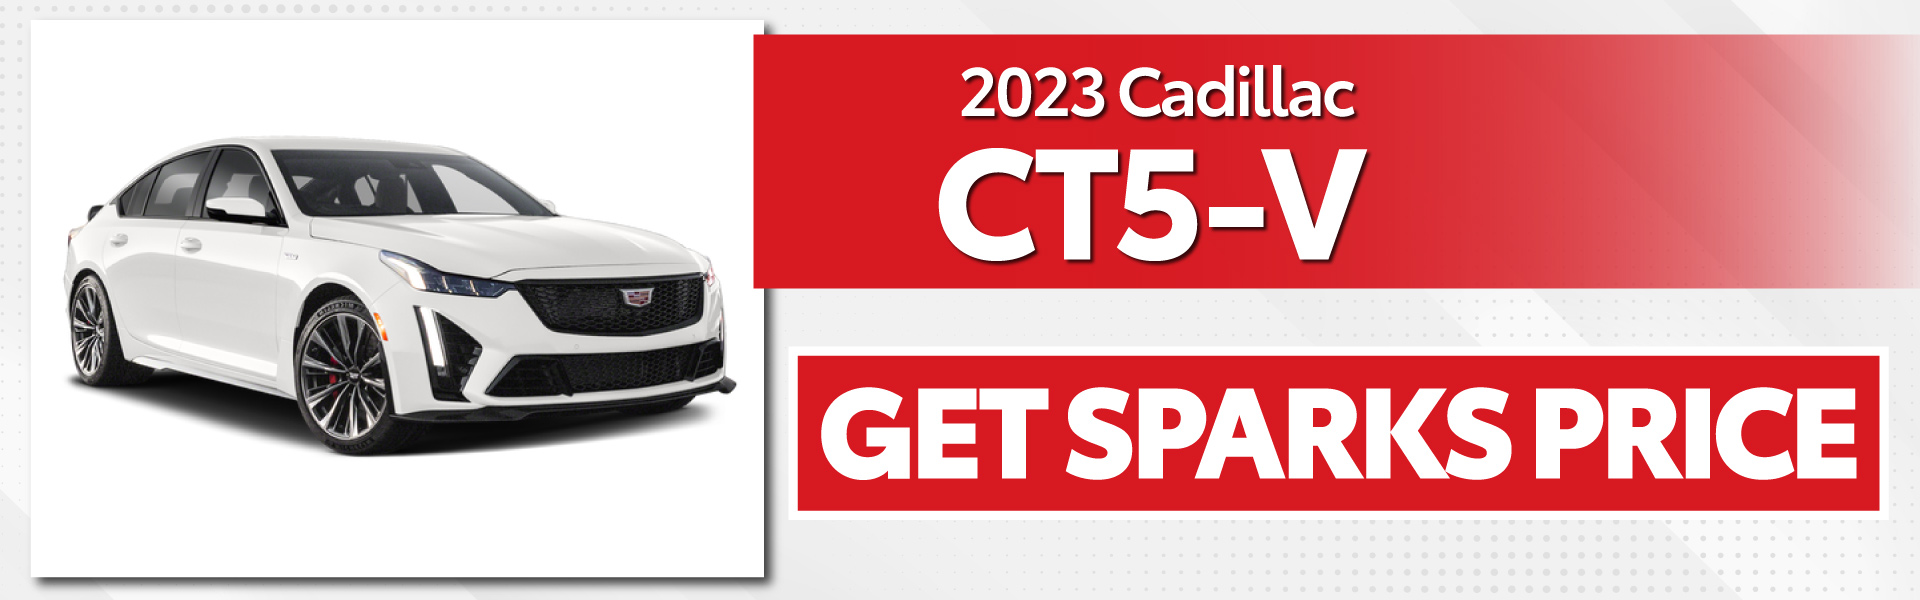 2023 Cadillac CT5-V - Get Sparks Price